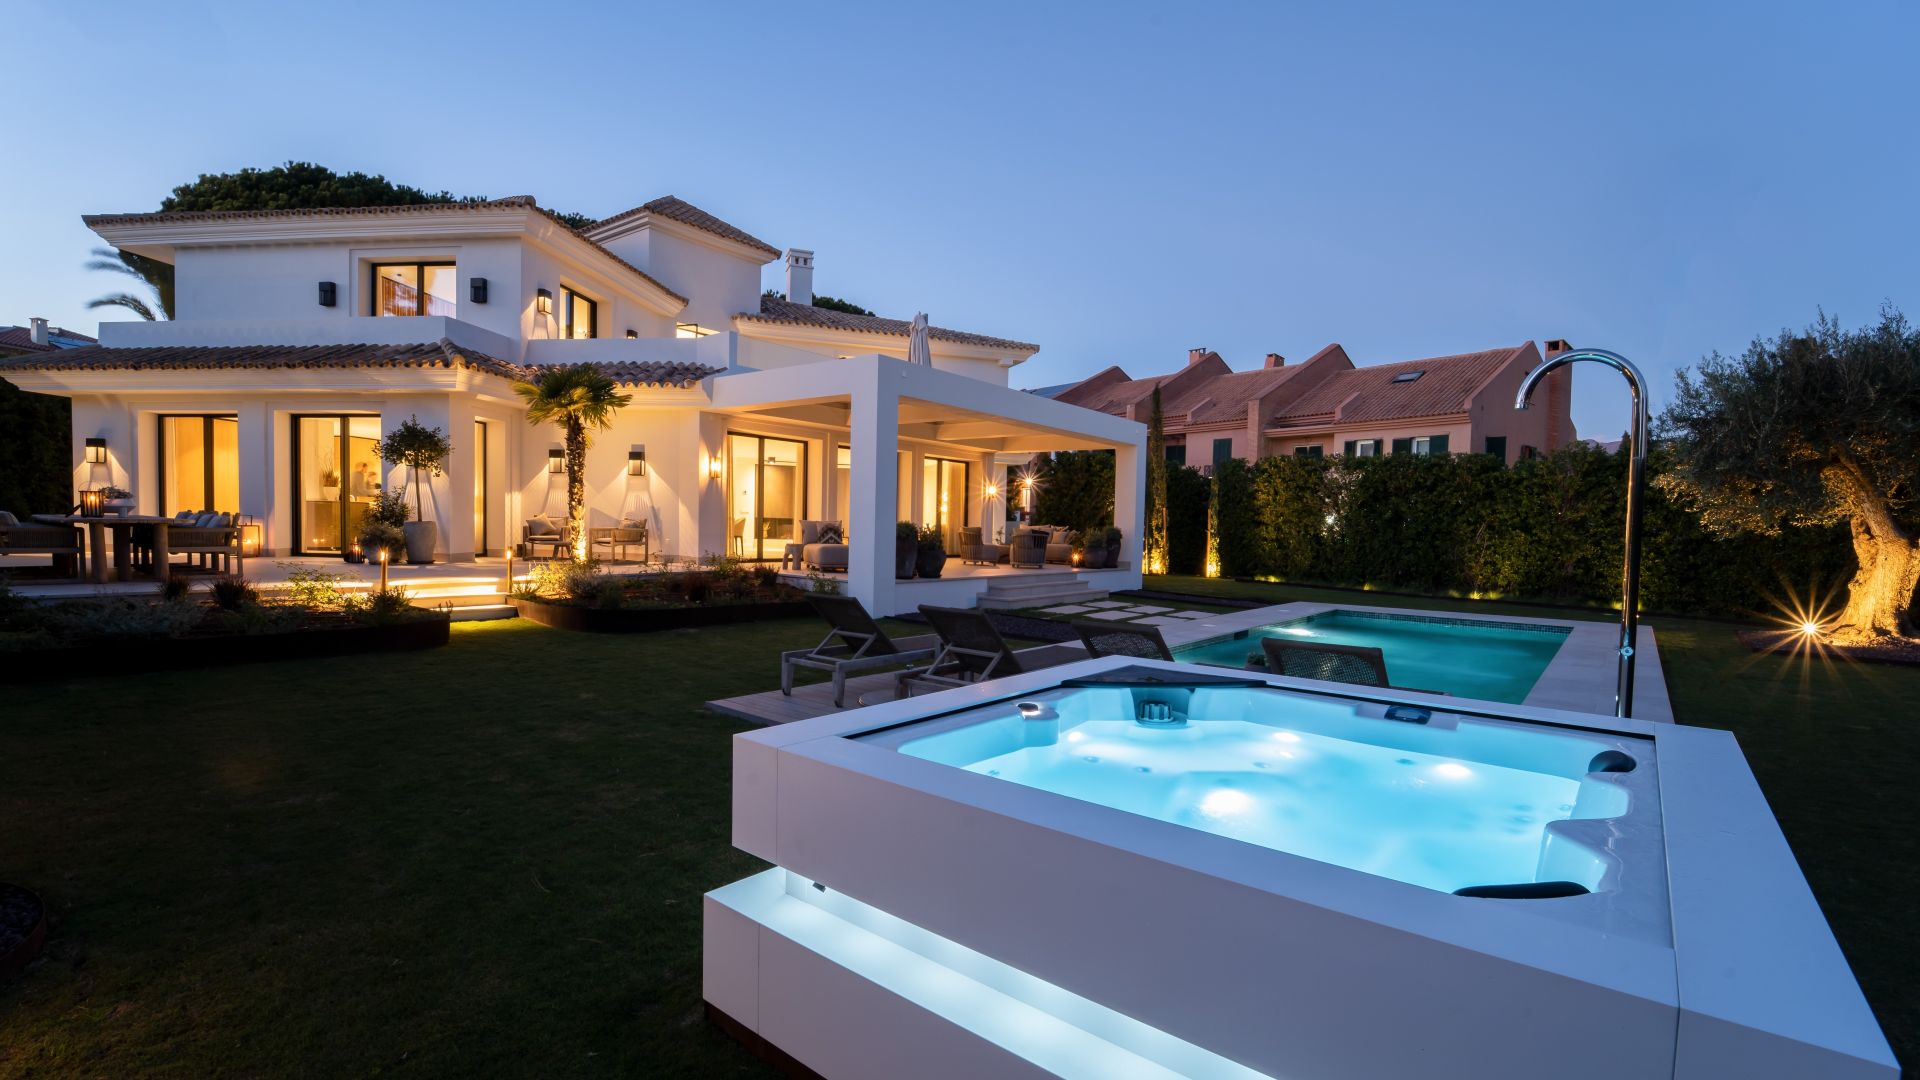 Luxury villa ready to move into near the beach | Engel & Völkers Marbella